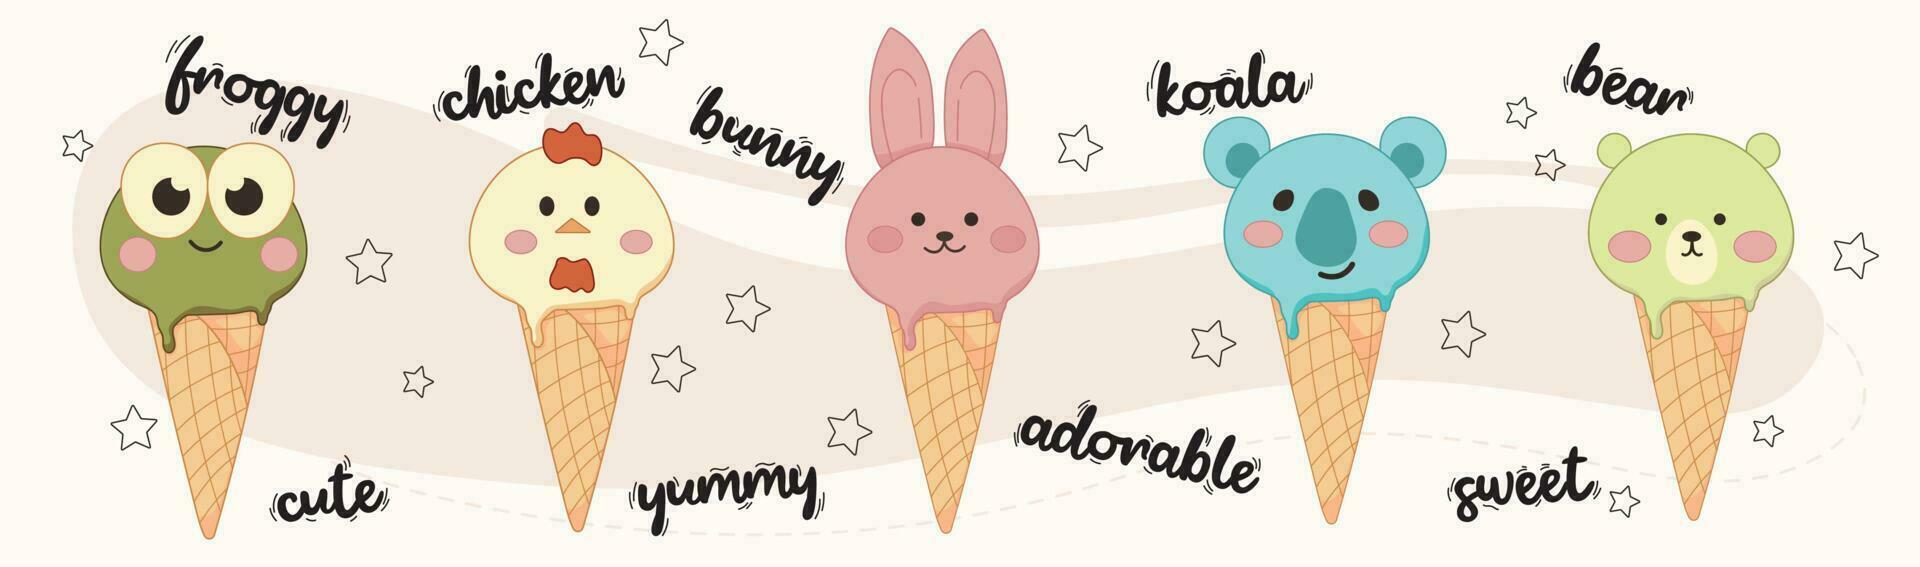 Kawaii animal ice cream set with lettering. Asian food in cartoon style. Frog, chicken, bunny, koala, bear. vector